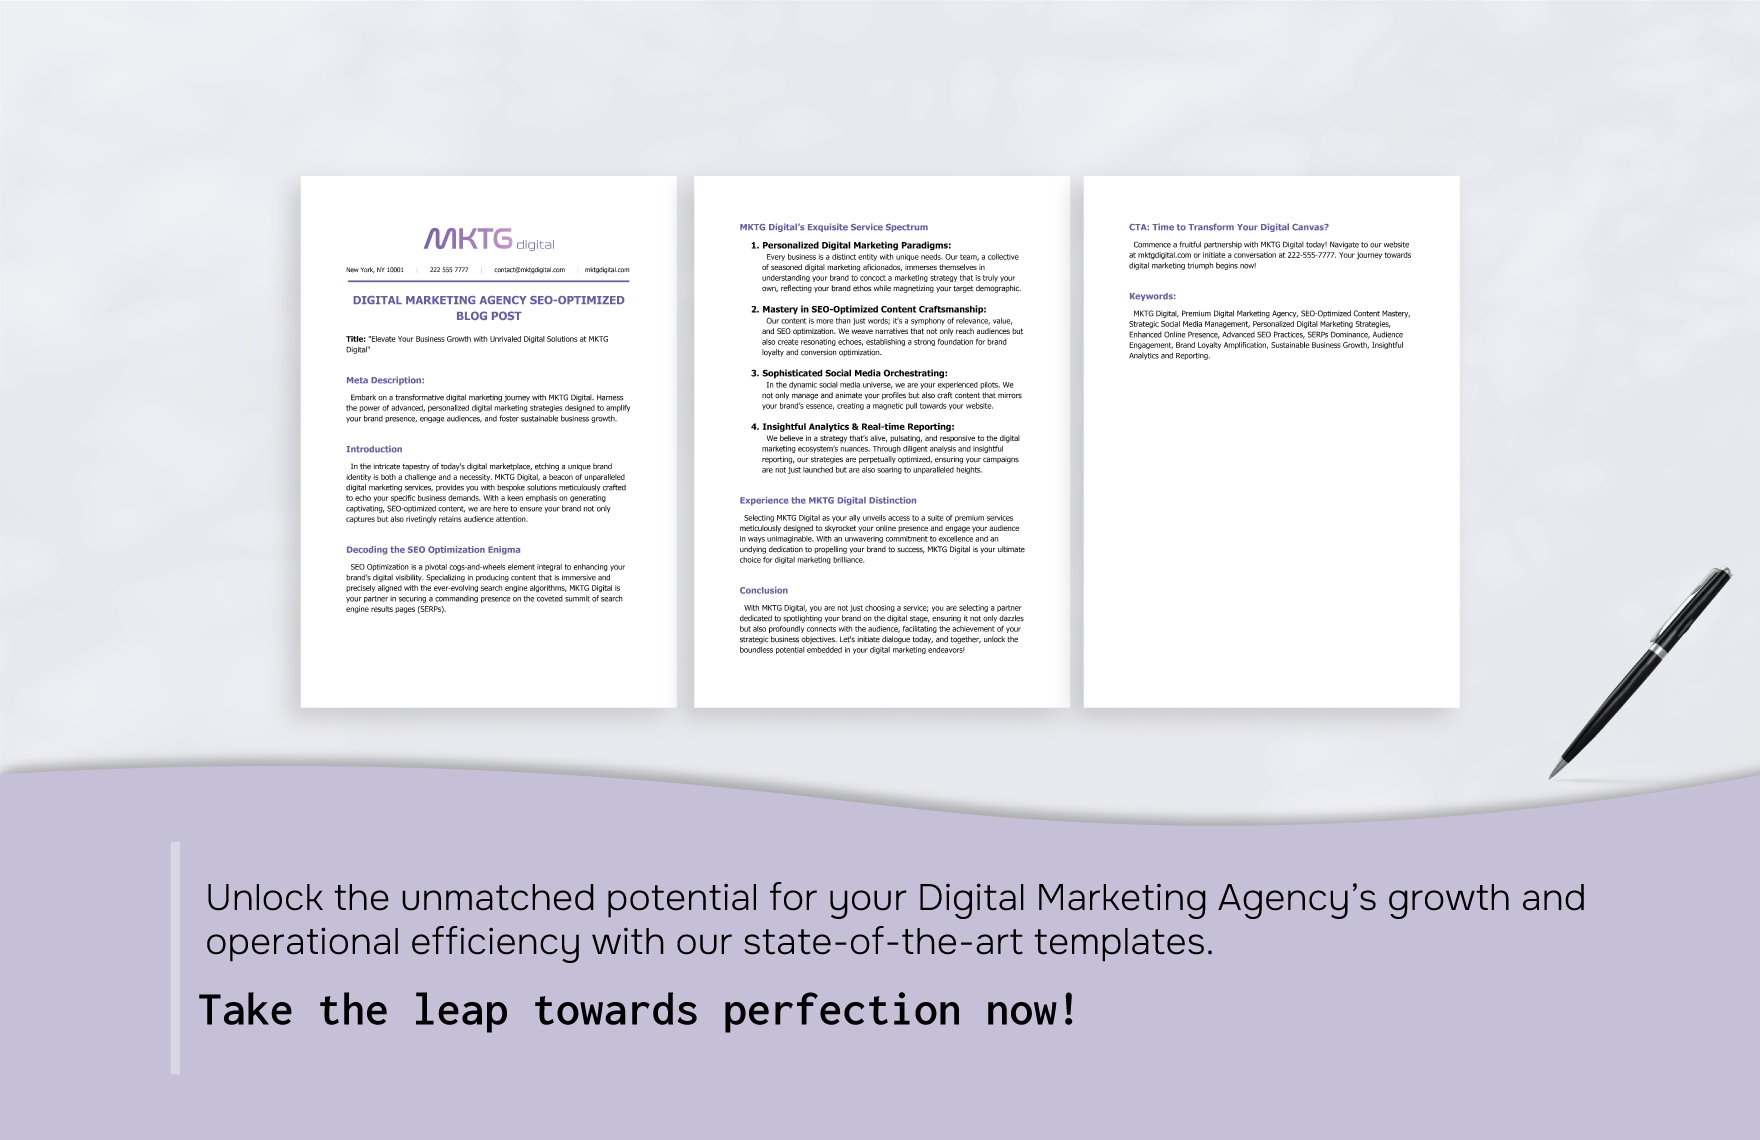 Digital Marketing Agency SEO-Optimized Blog Post Template